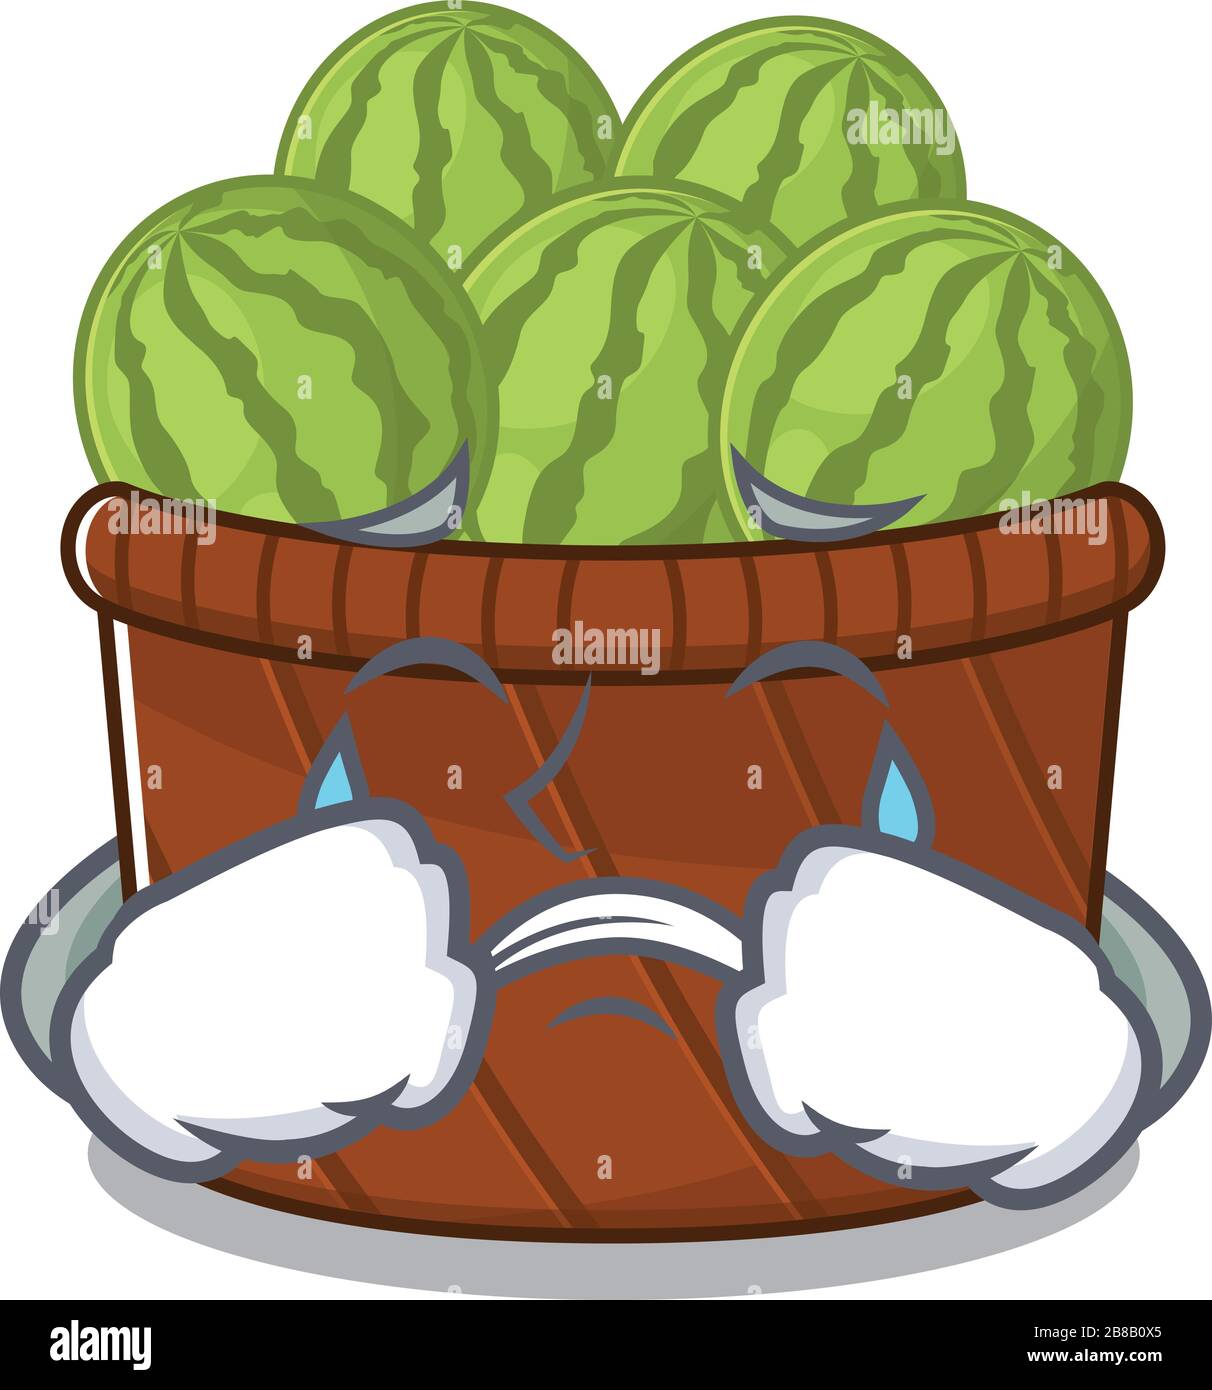 A Crying watermelon fruit basket cartoon mascot design style Stock Vector  Image & Art - Alamy